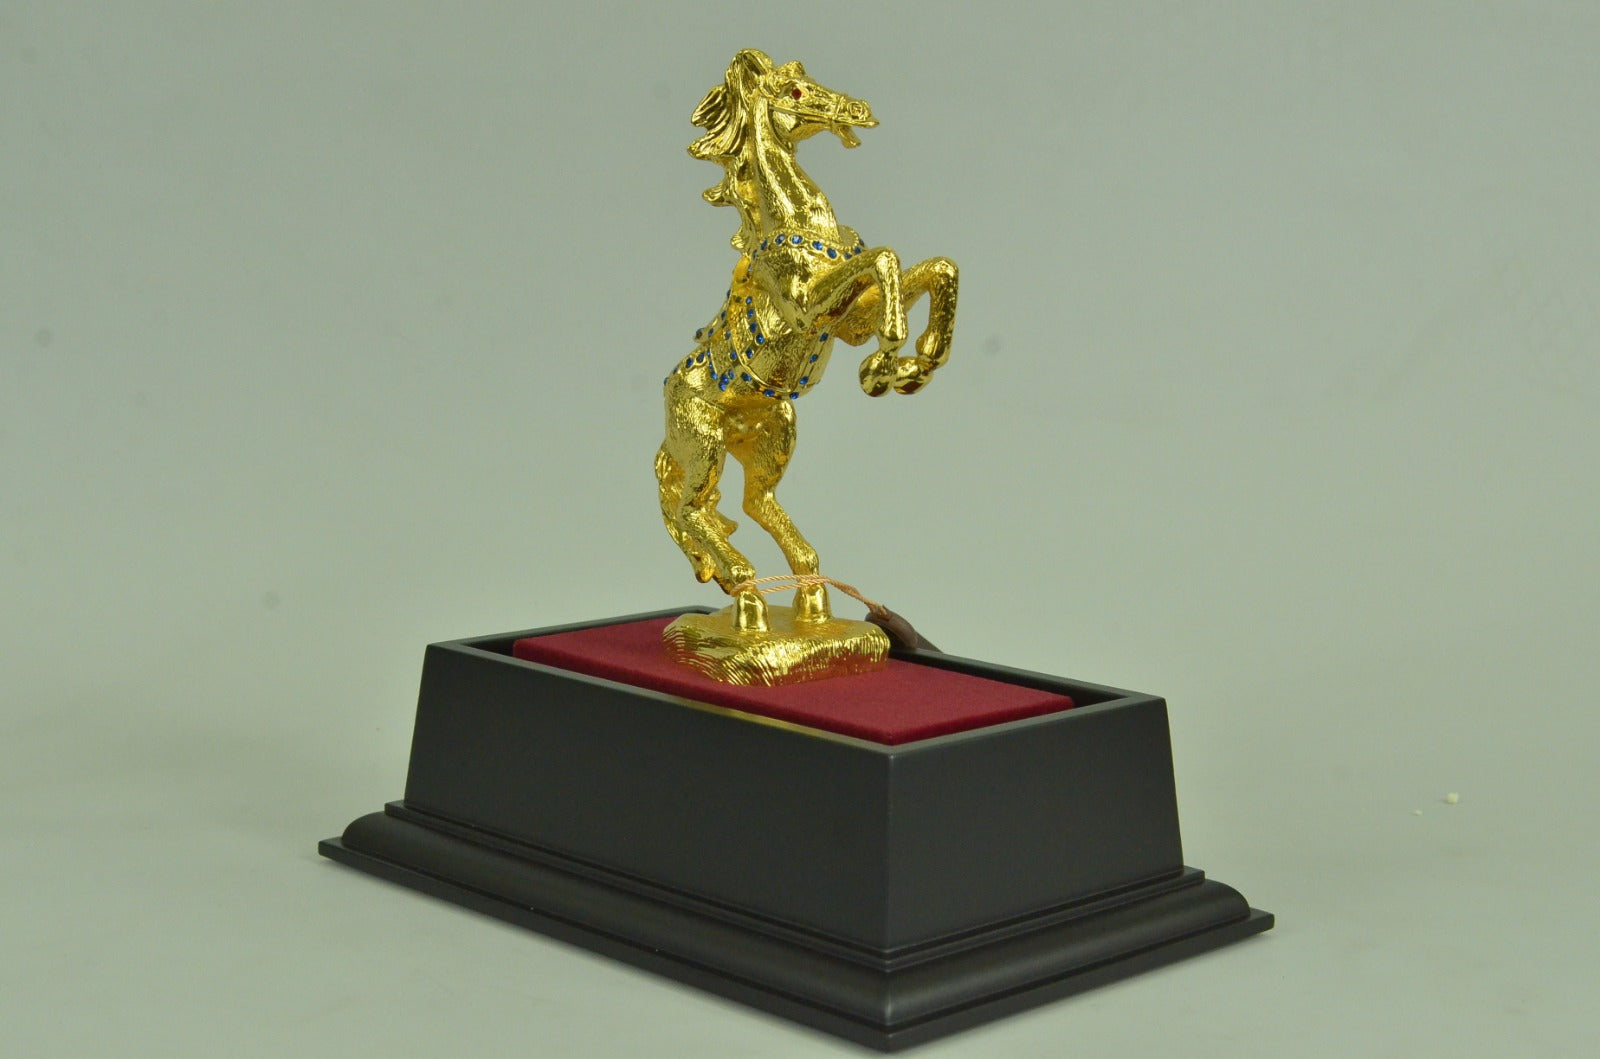 Hand Made Wild Horse Trophy Award 24K Gold Bronze Figurine Figure